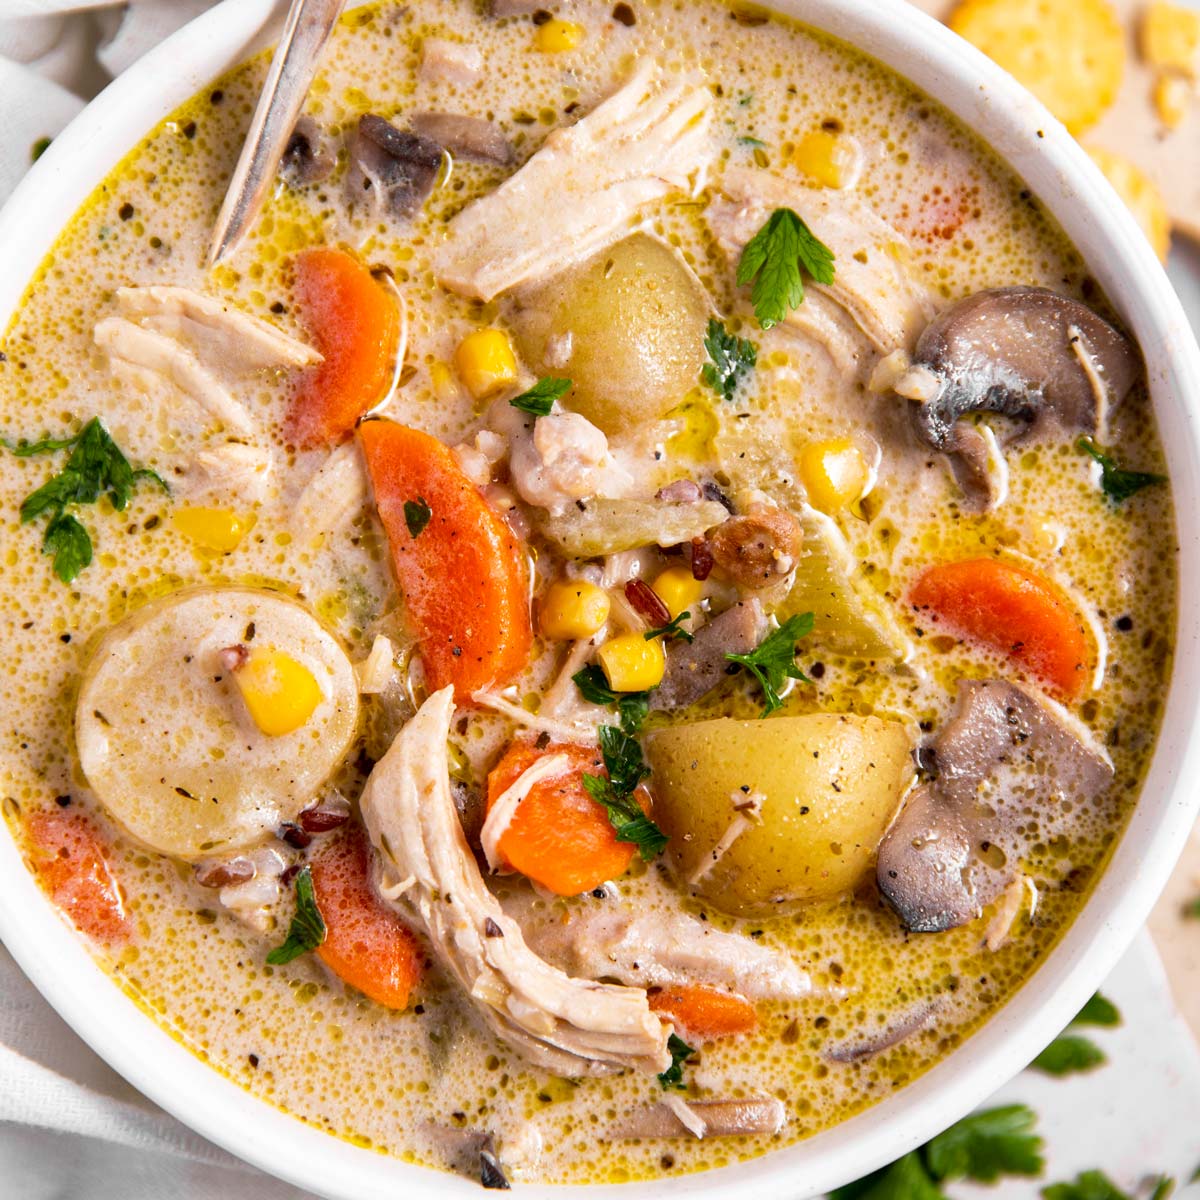 https://www.savorynothings.com/wp-content/uploads/2021/11/leftover-turkey-soup-recipe-image-sq.jpg